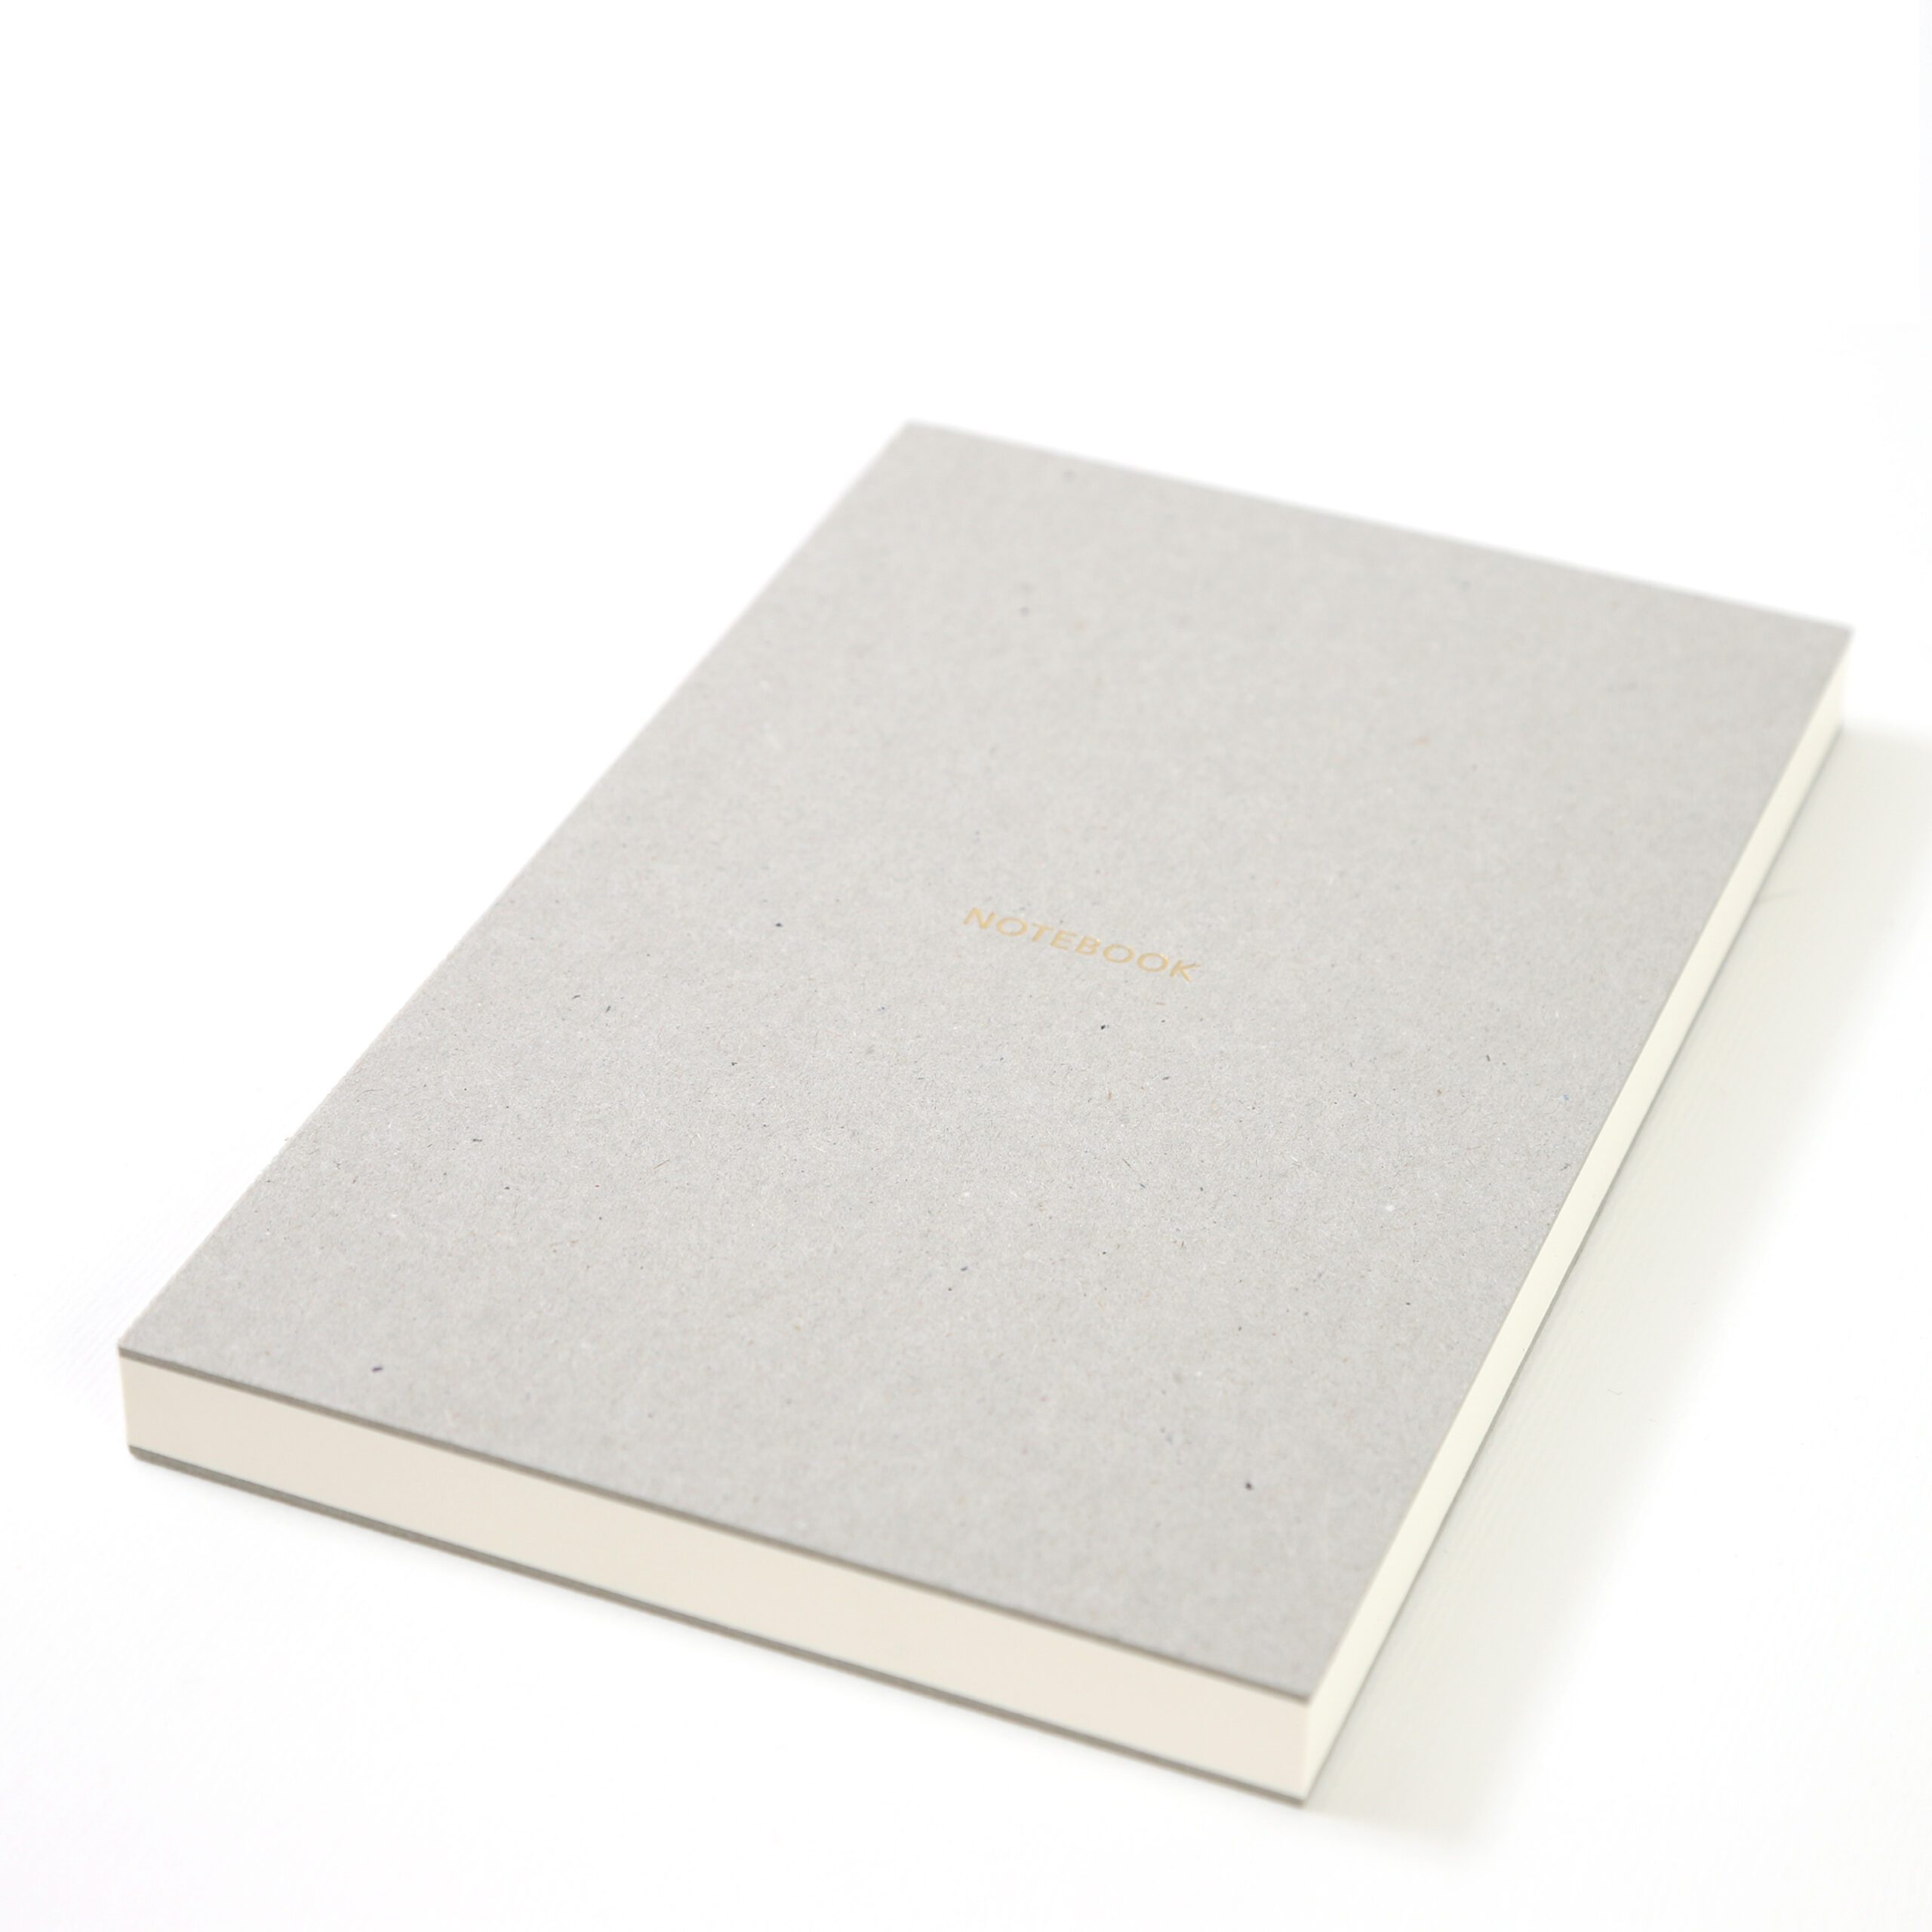 Notebook - Side